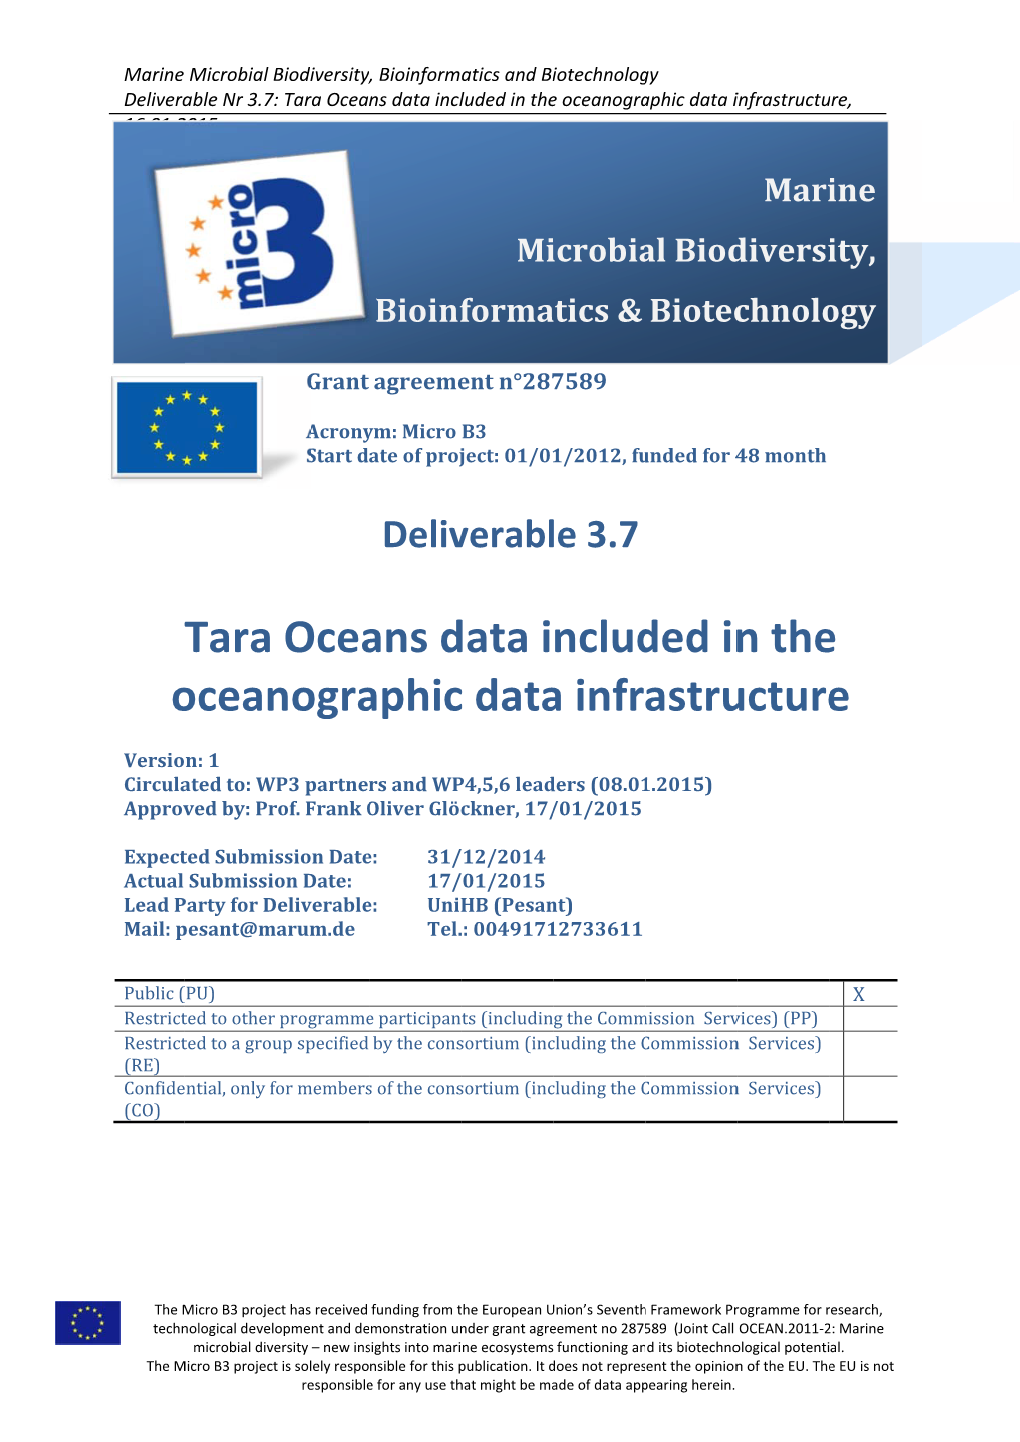 Tara-Oceans Data Included in the Oceanographic Data Infrastructure